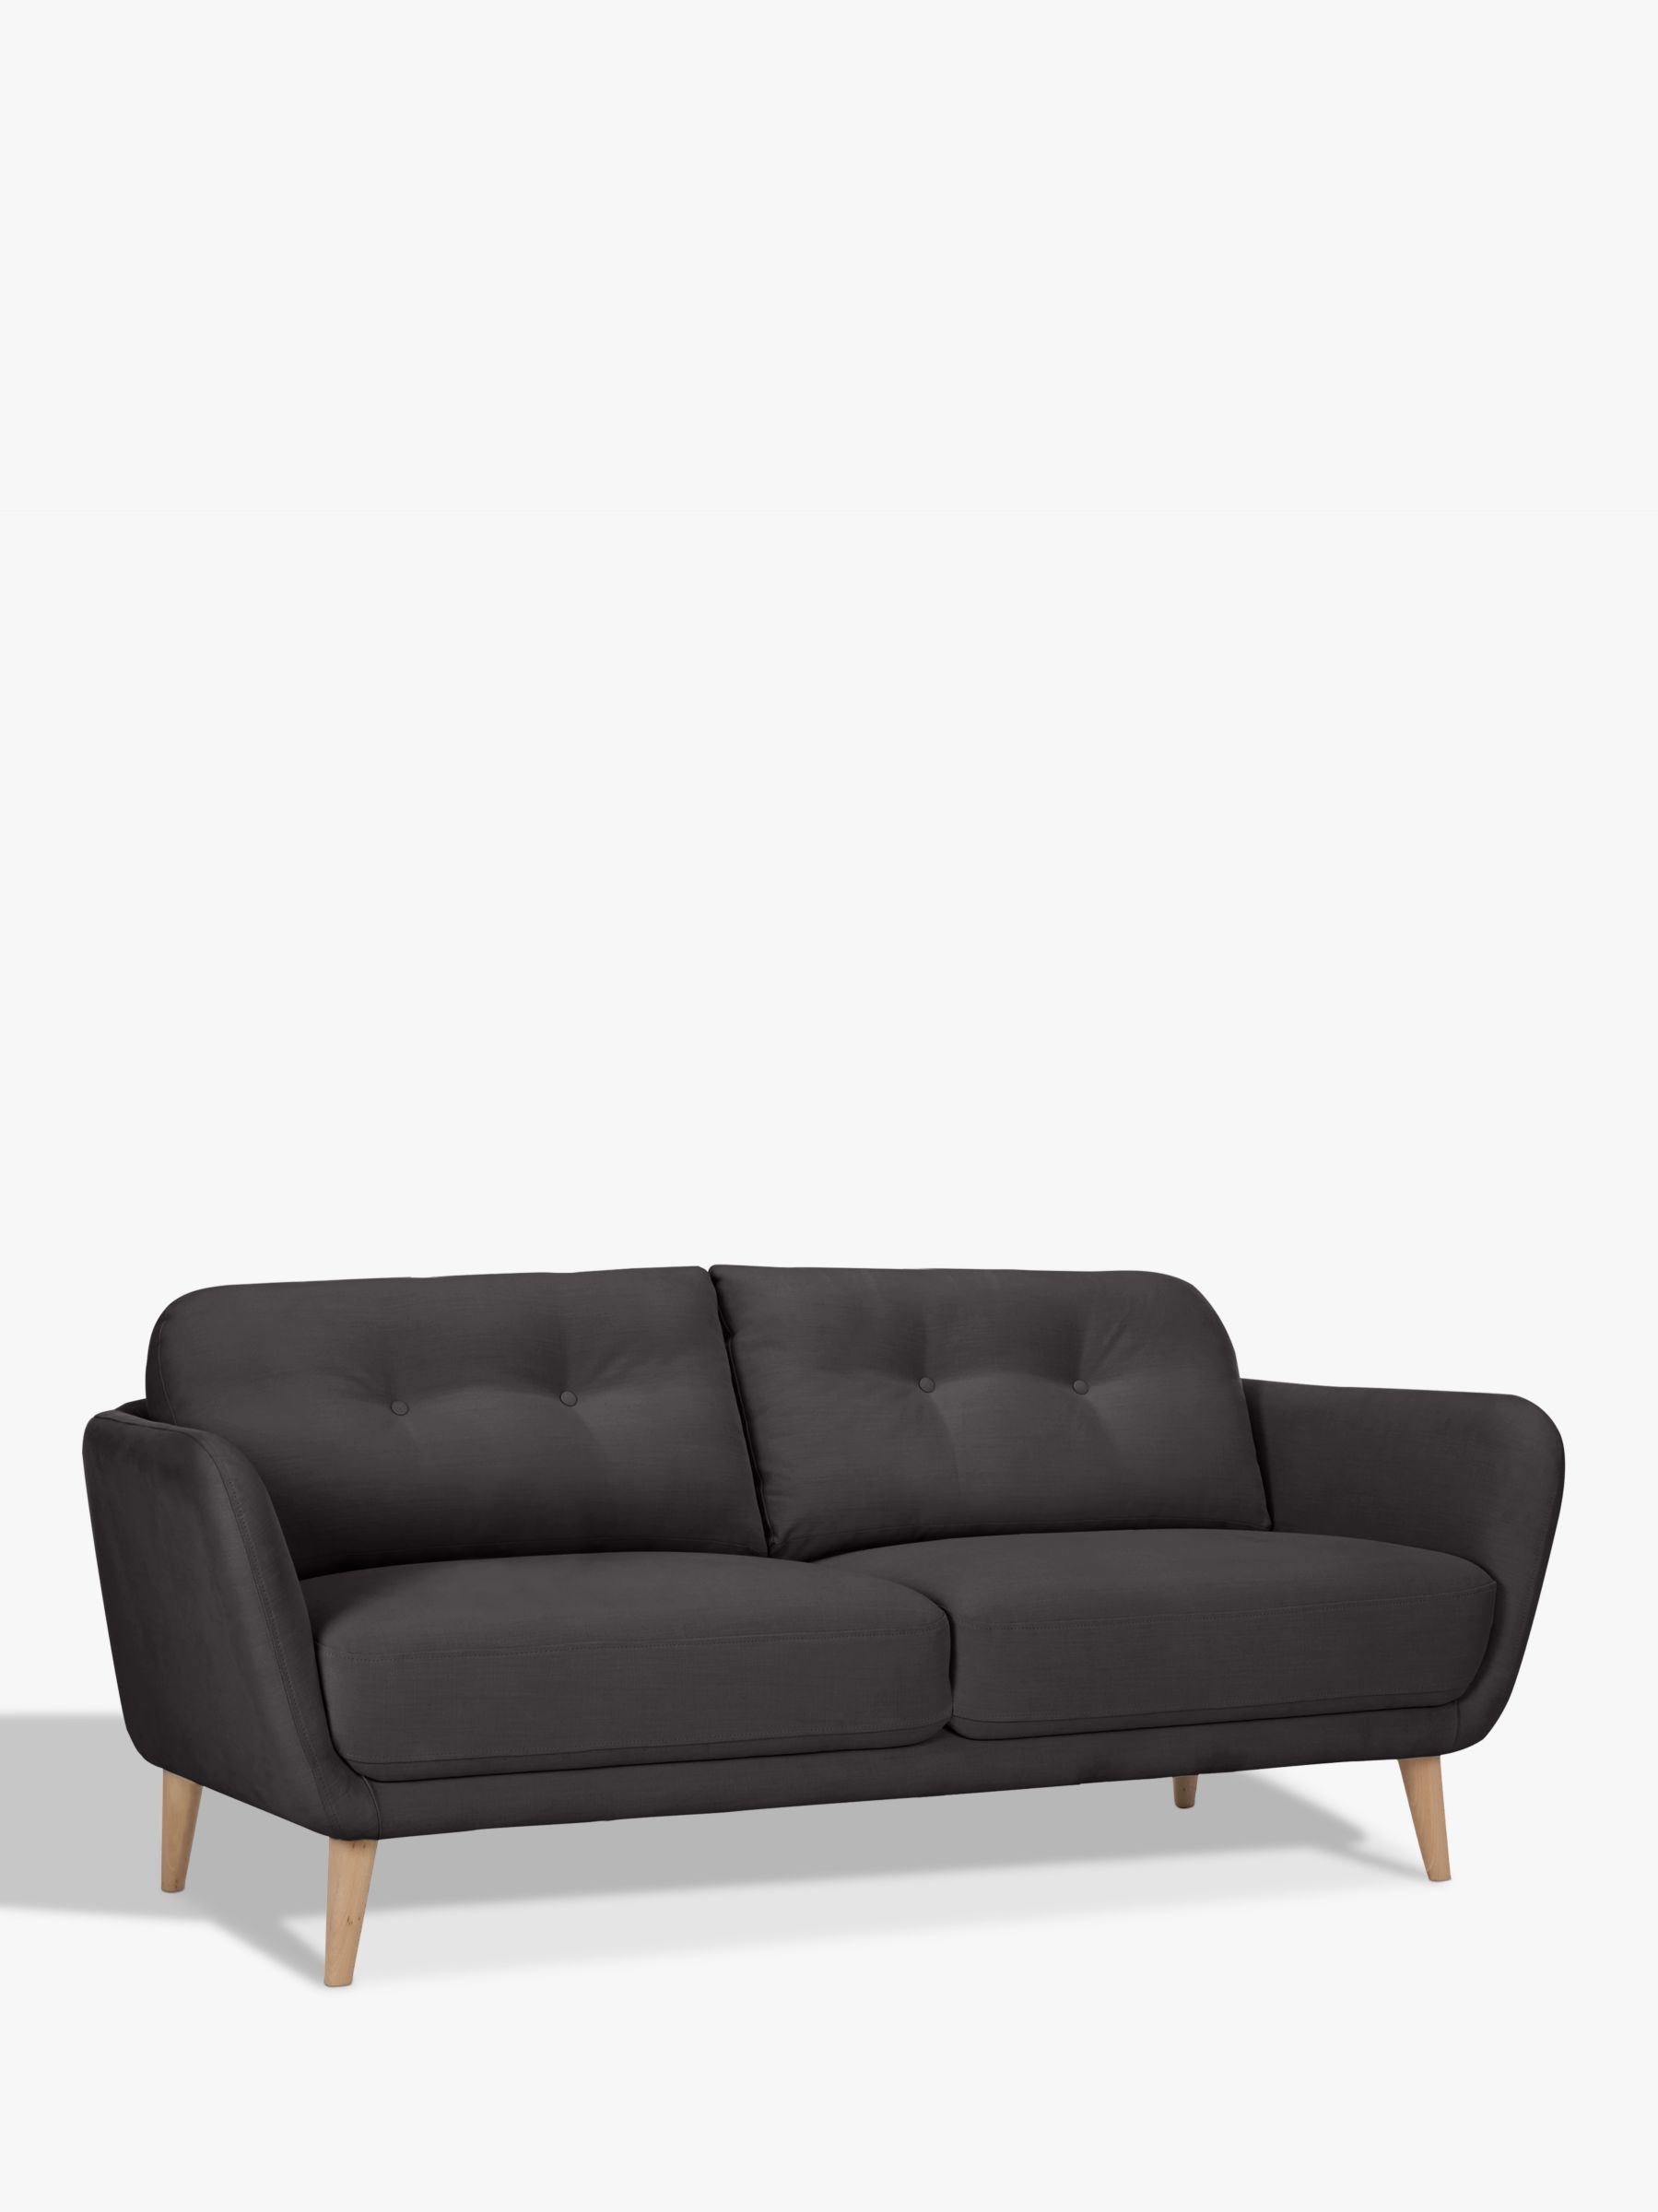 Arlo Range, John Lewis Arlo Medium 2 Seater Sofa, Light Leg, Smooth Velvet Charcoal